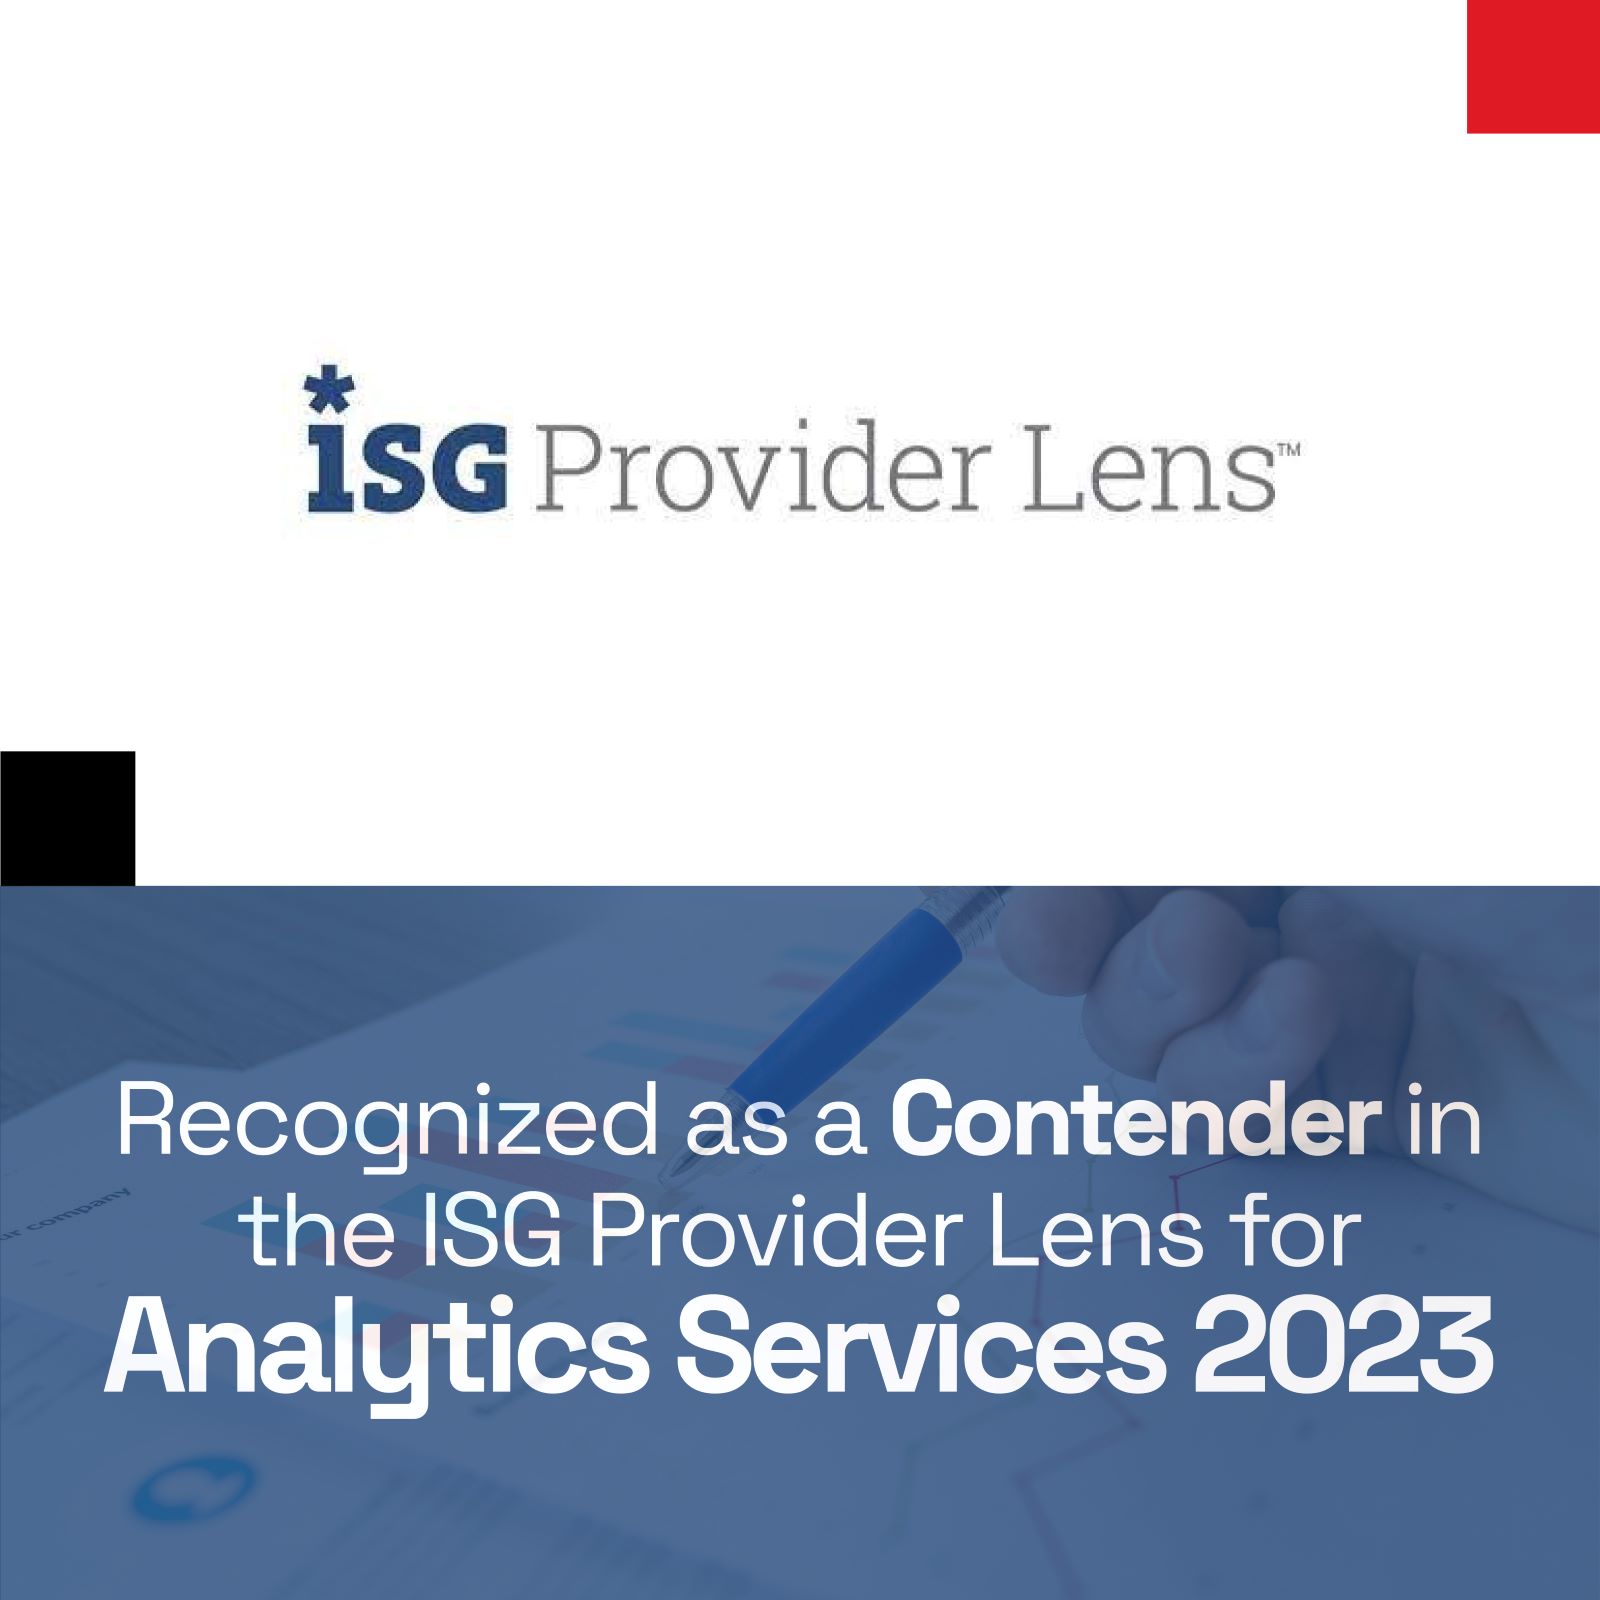 ISG Provider Lens - Contender for Analytics Services